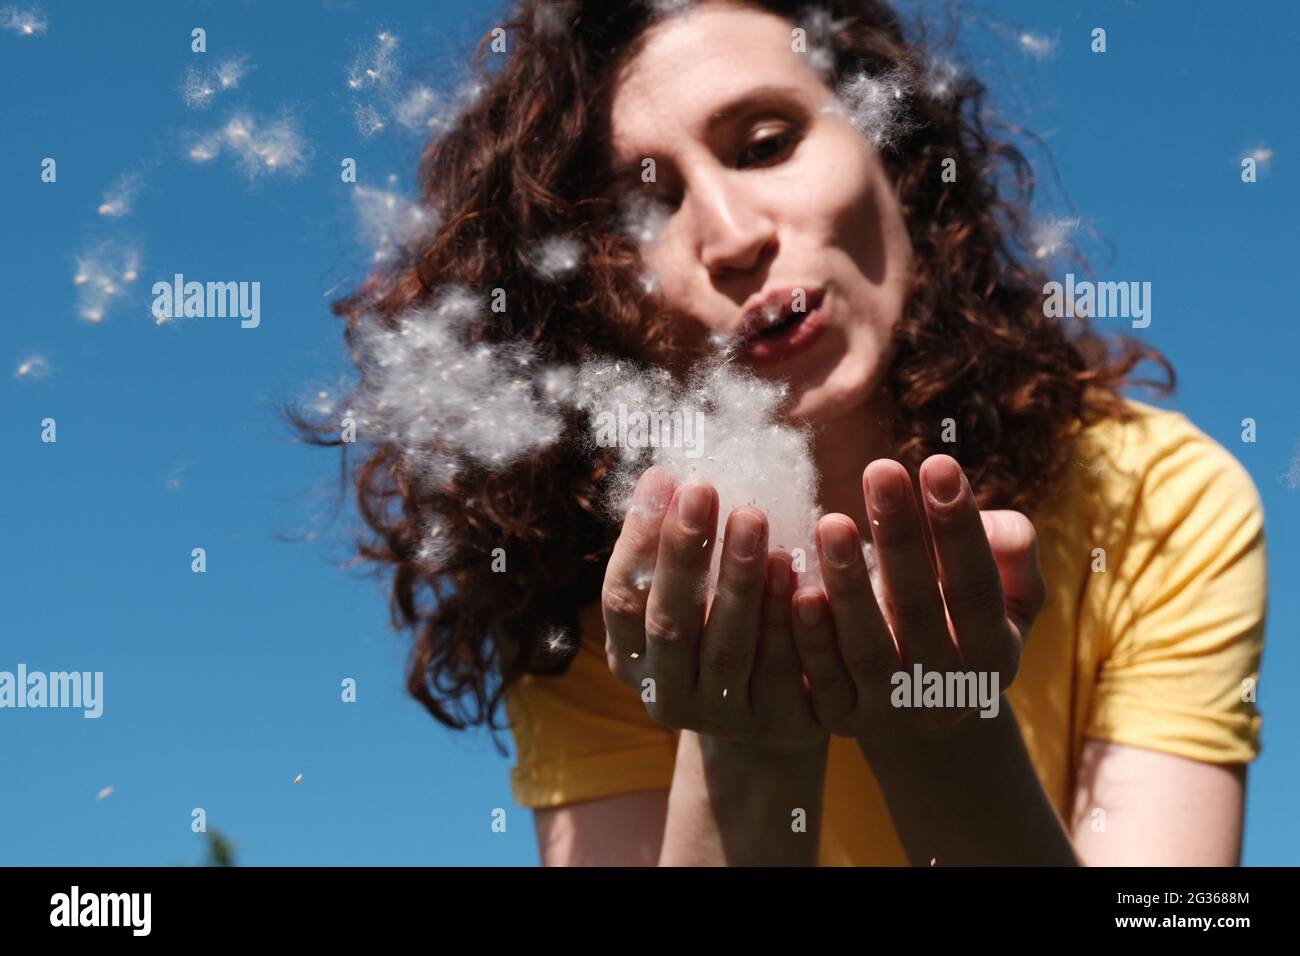 Girl blows poplar fluff off her hands. Fluff flies in different directions Stock Photo